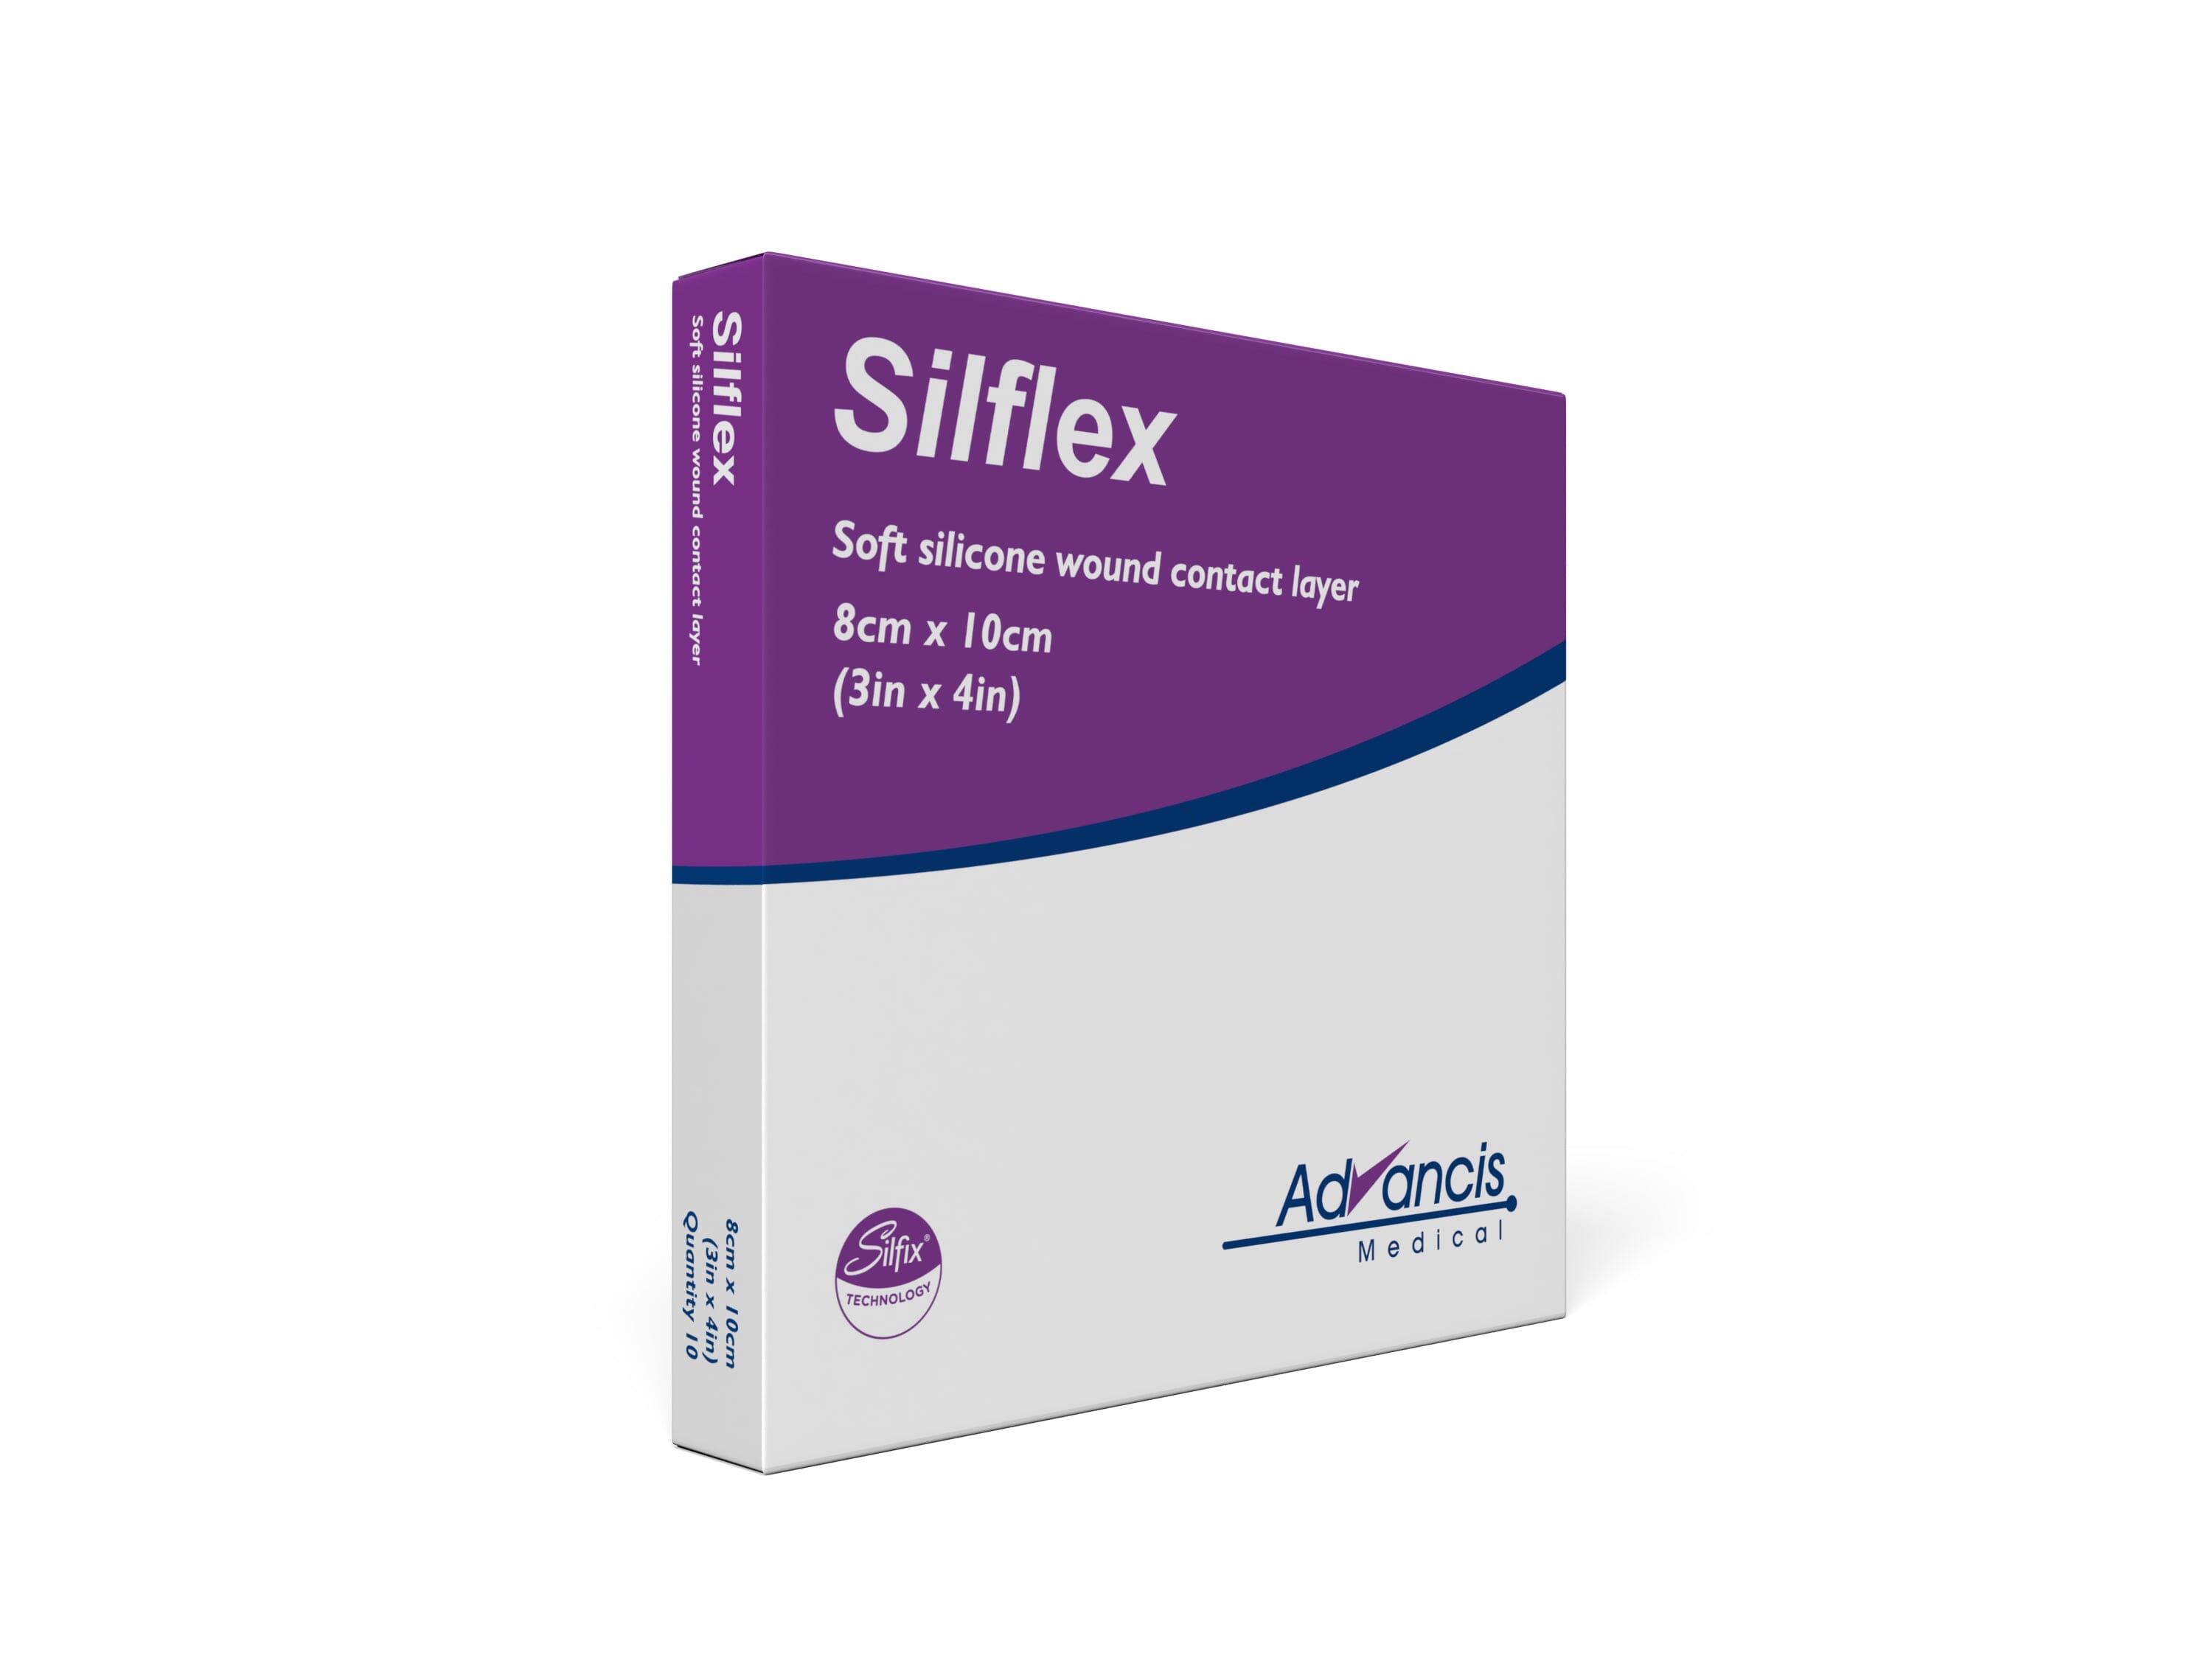 Silflex – Advancis Medical